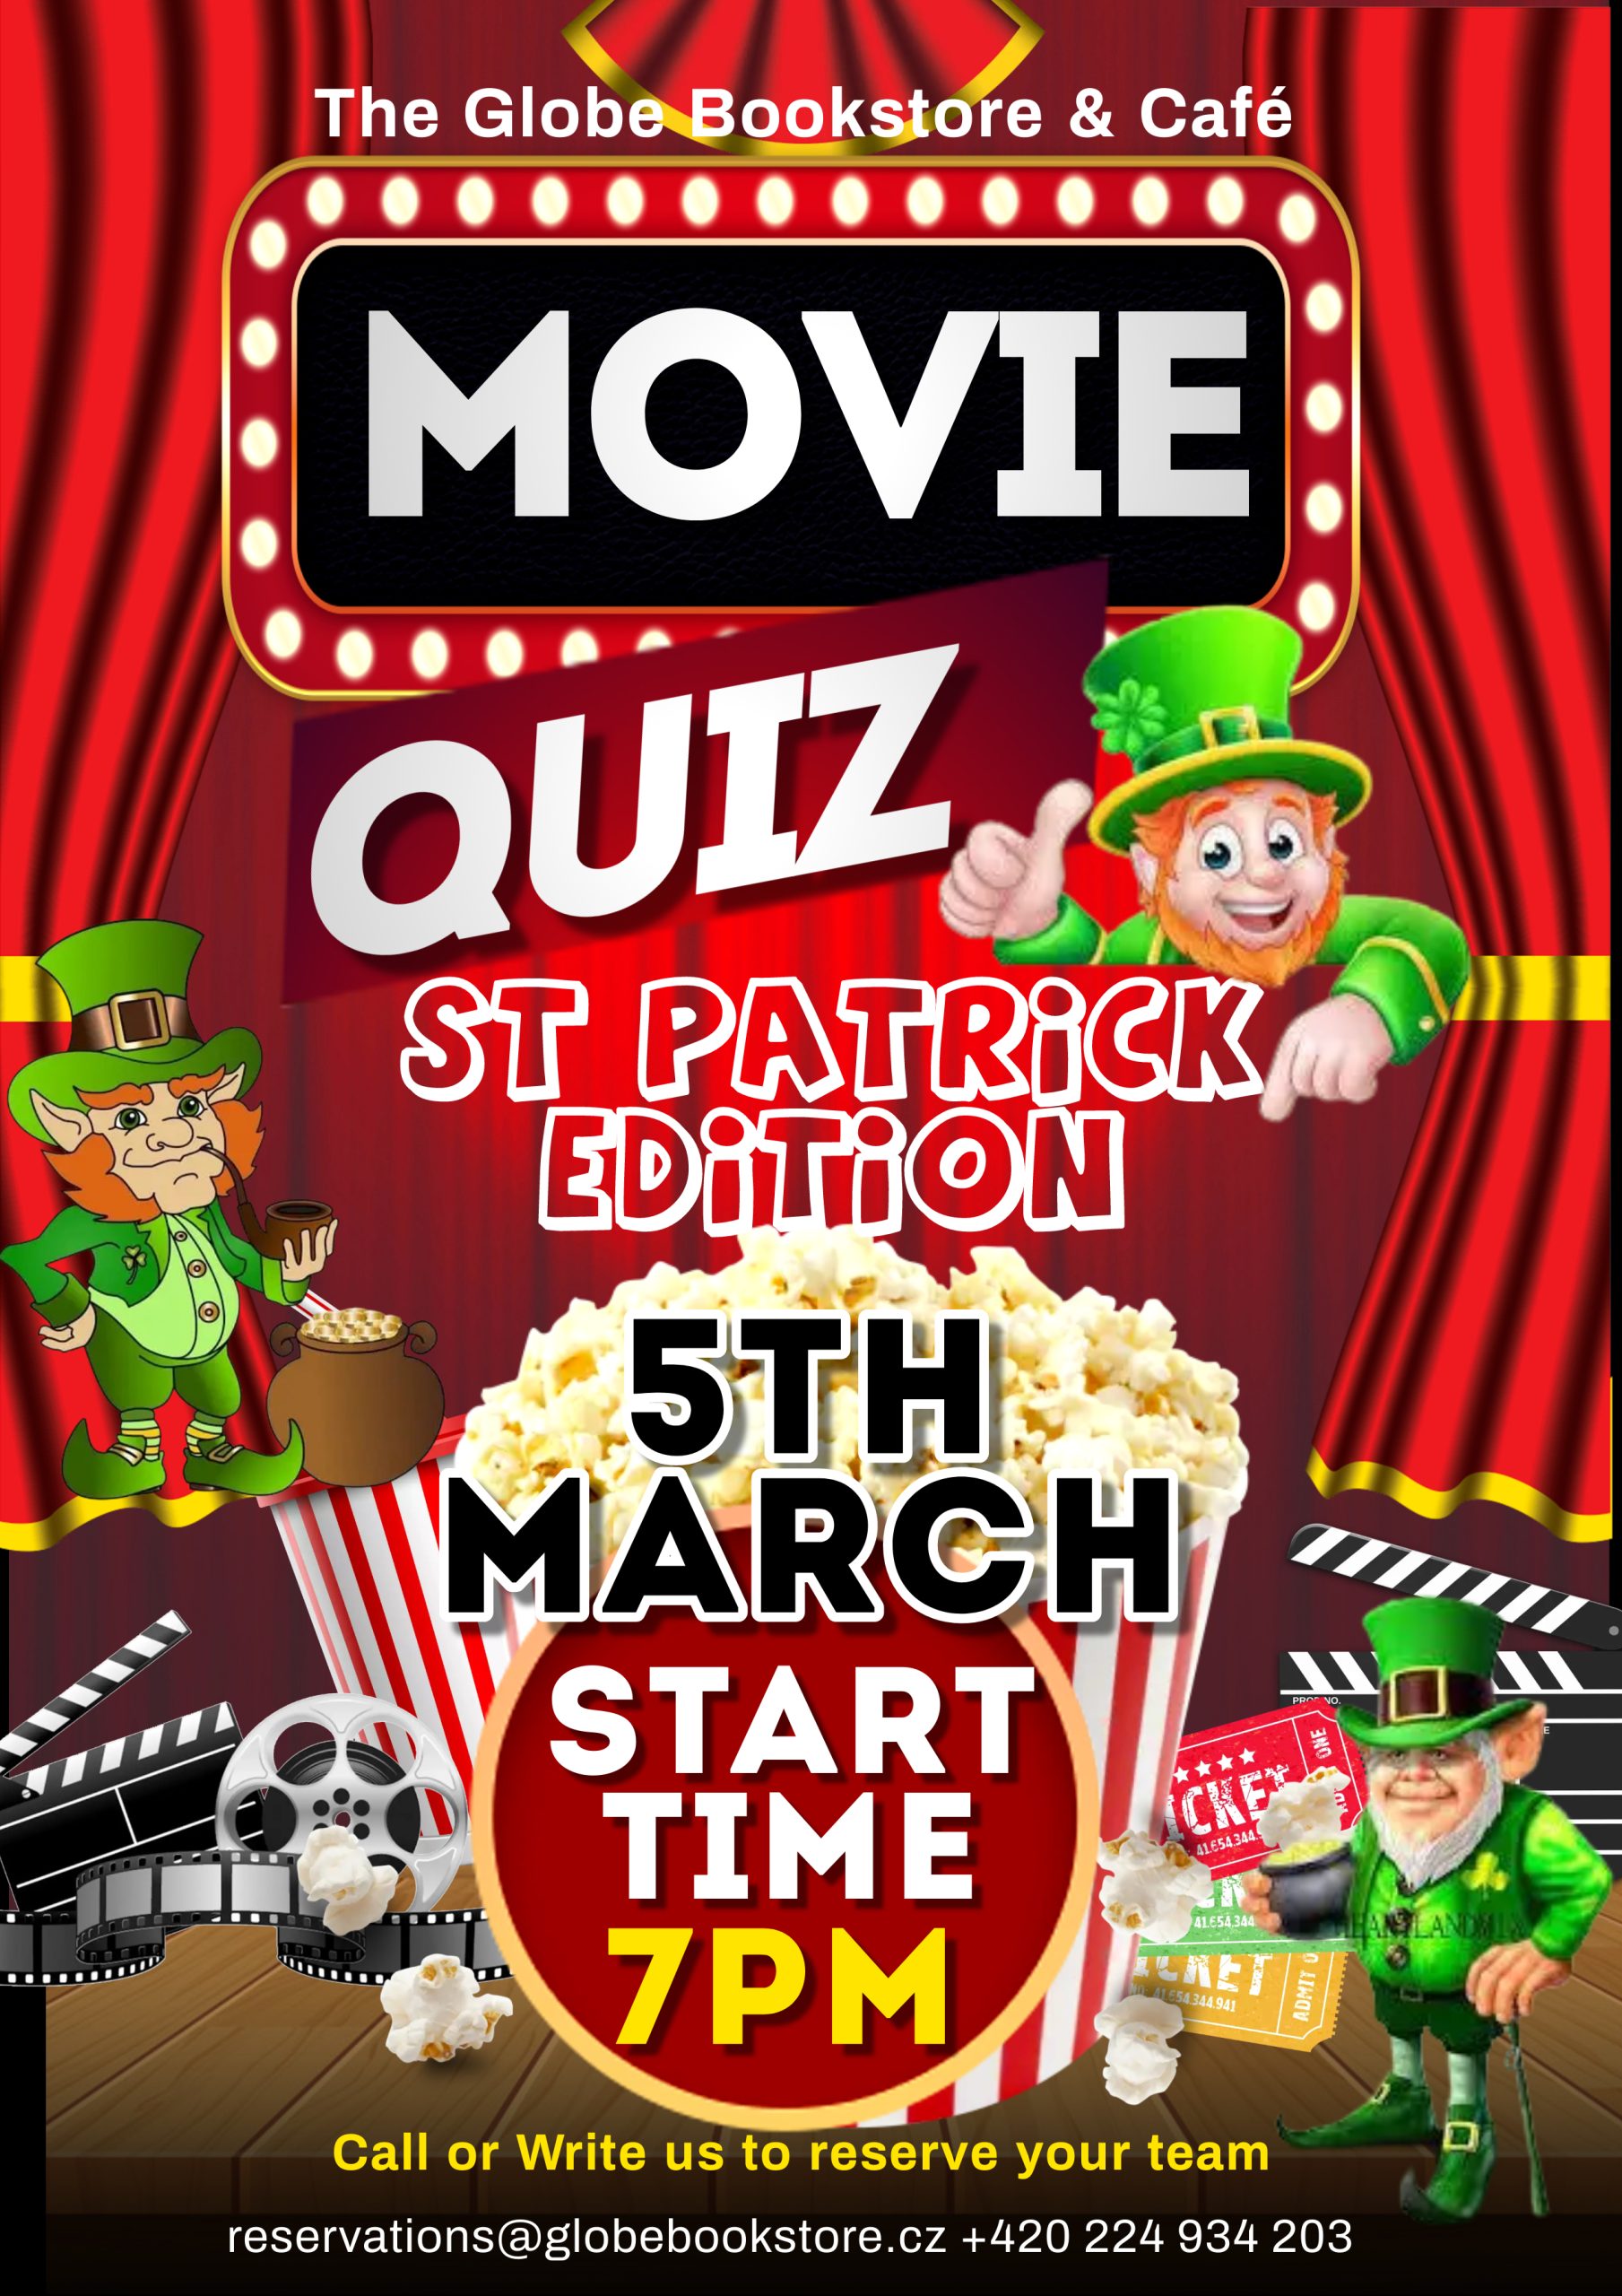 Film Quiz "St Patricks Edition"